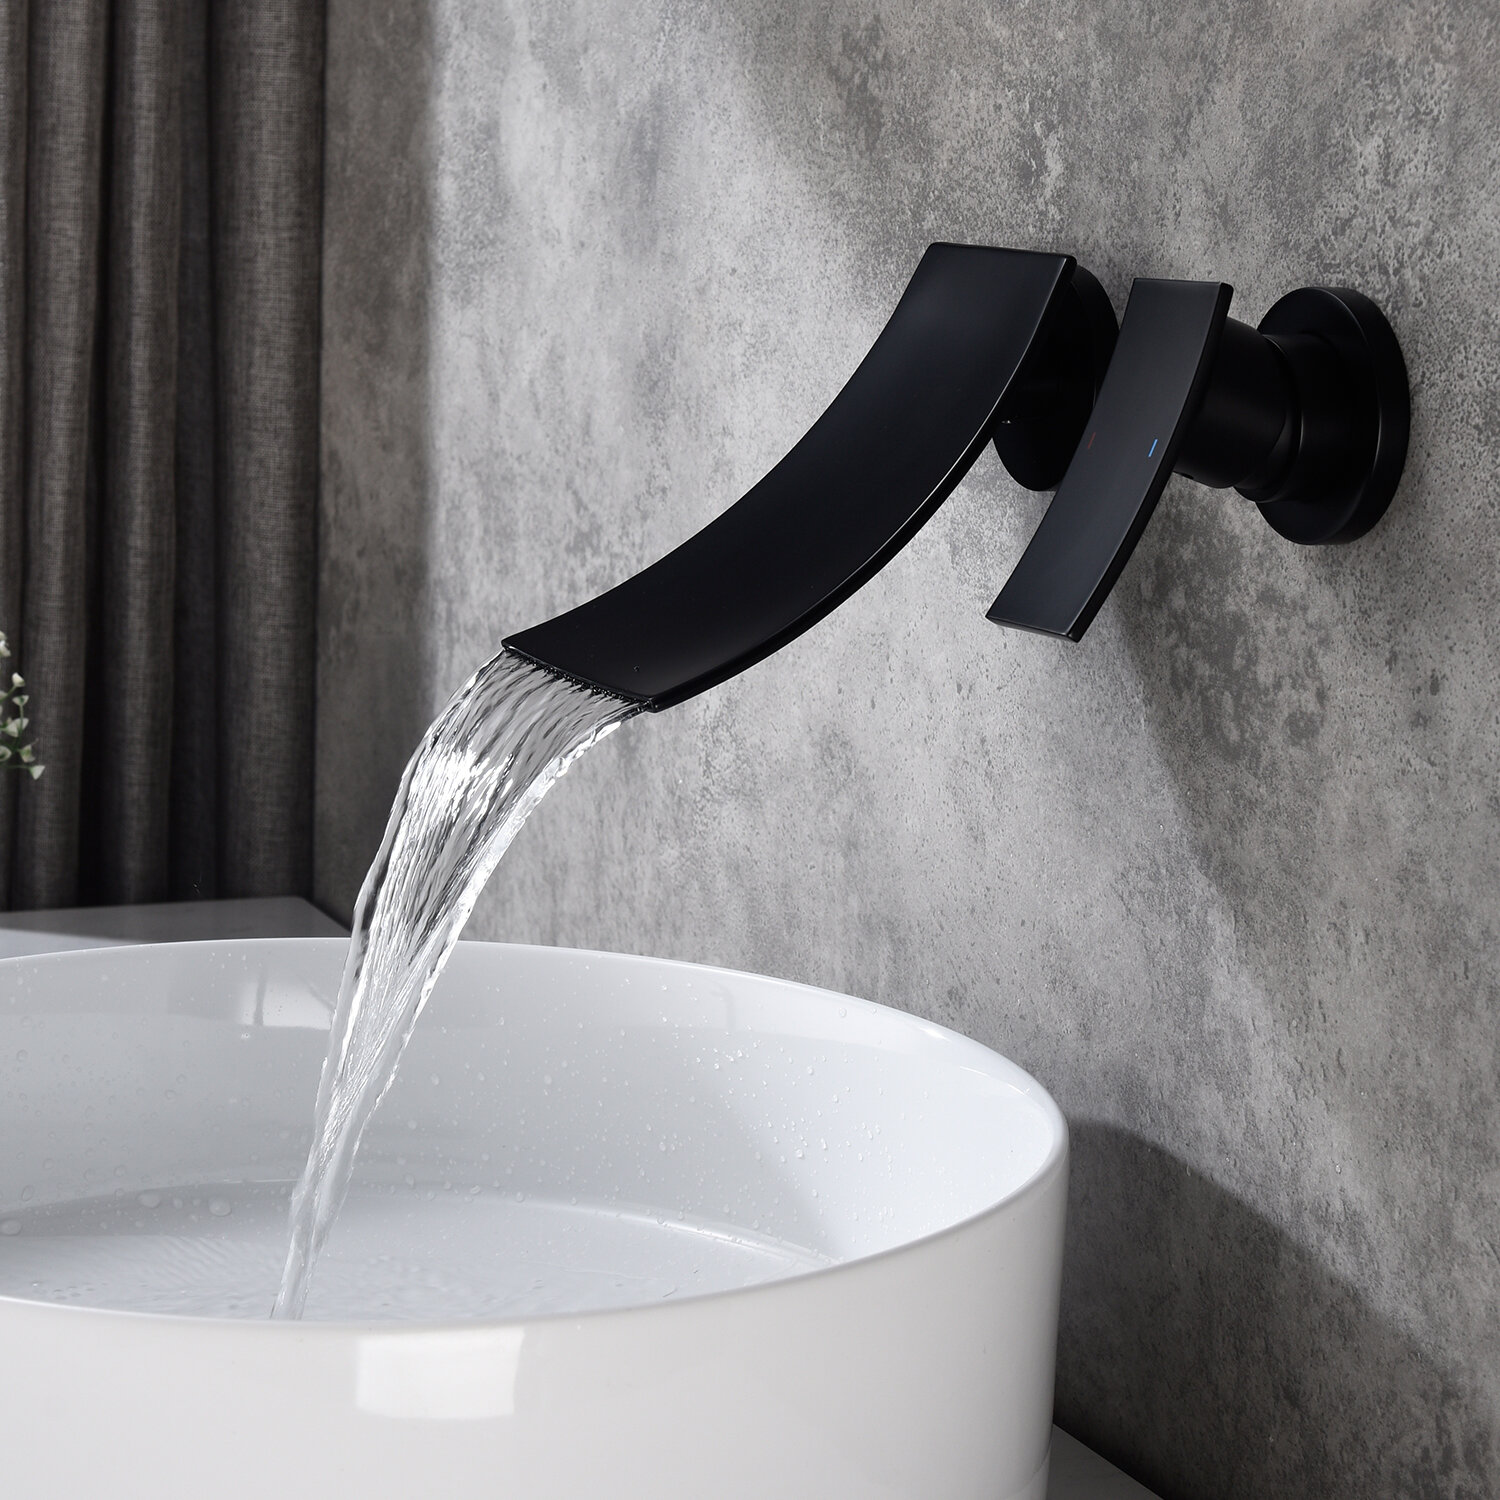 Organnice Wall Mounted Bathroom Faucet Reviews Wayfair